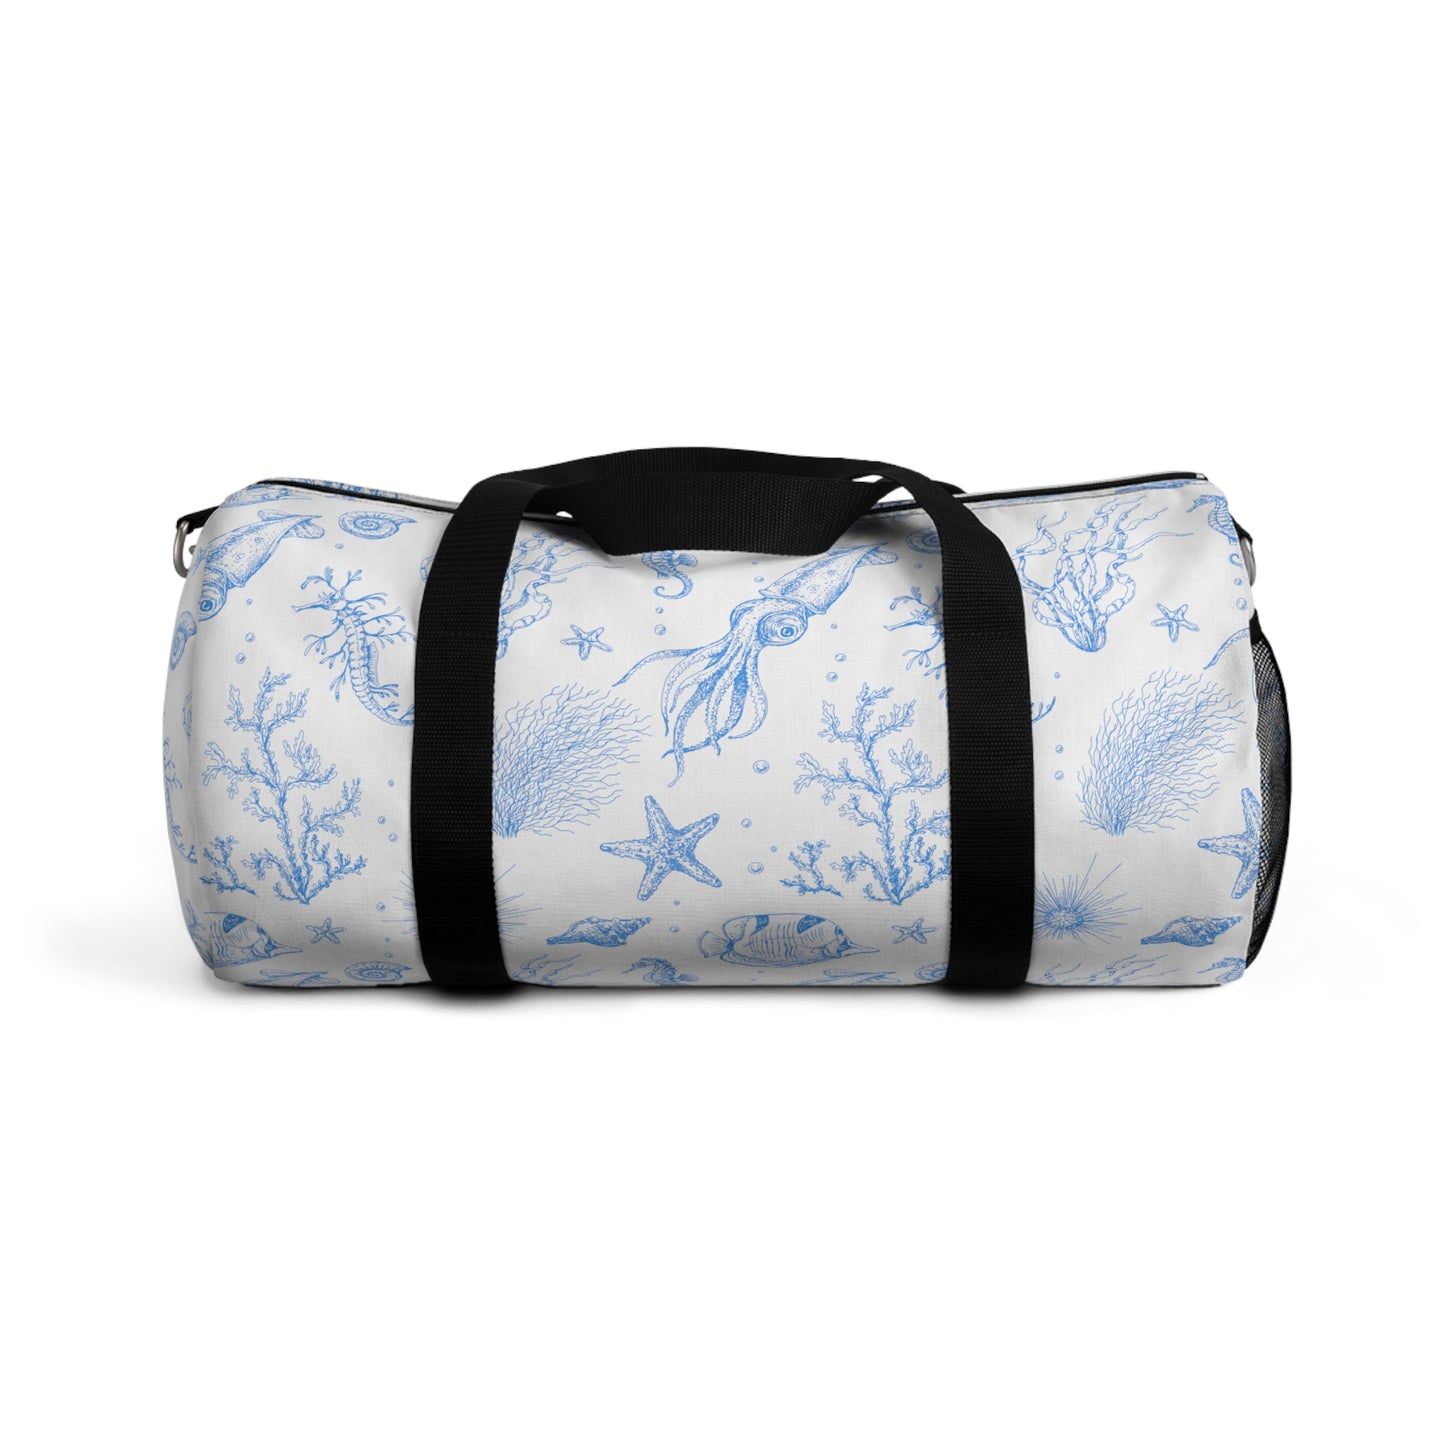 'Under the Sea' Duffel Bag (2 sizes)